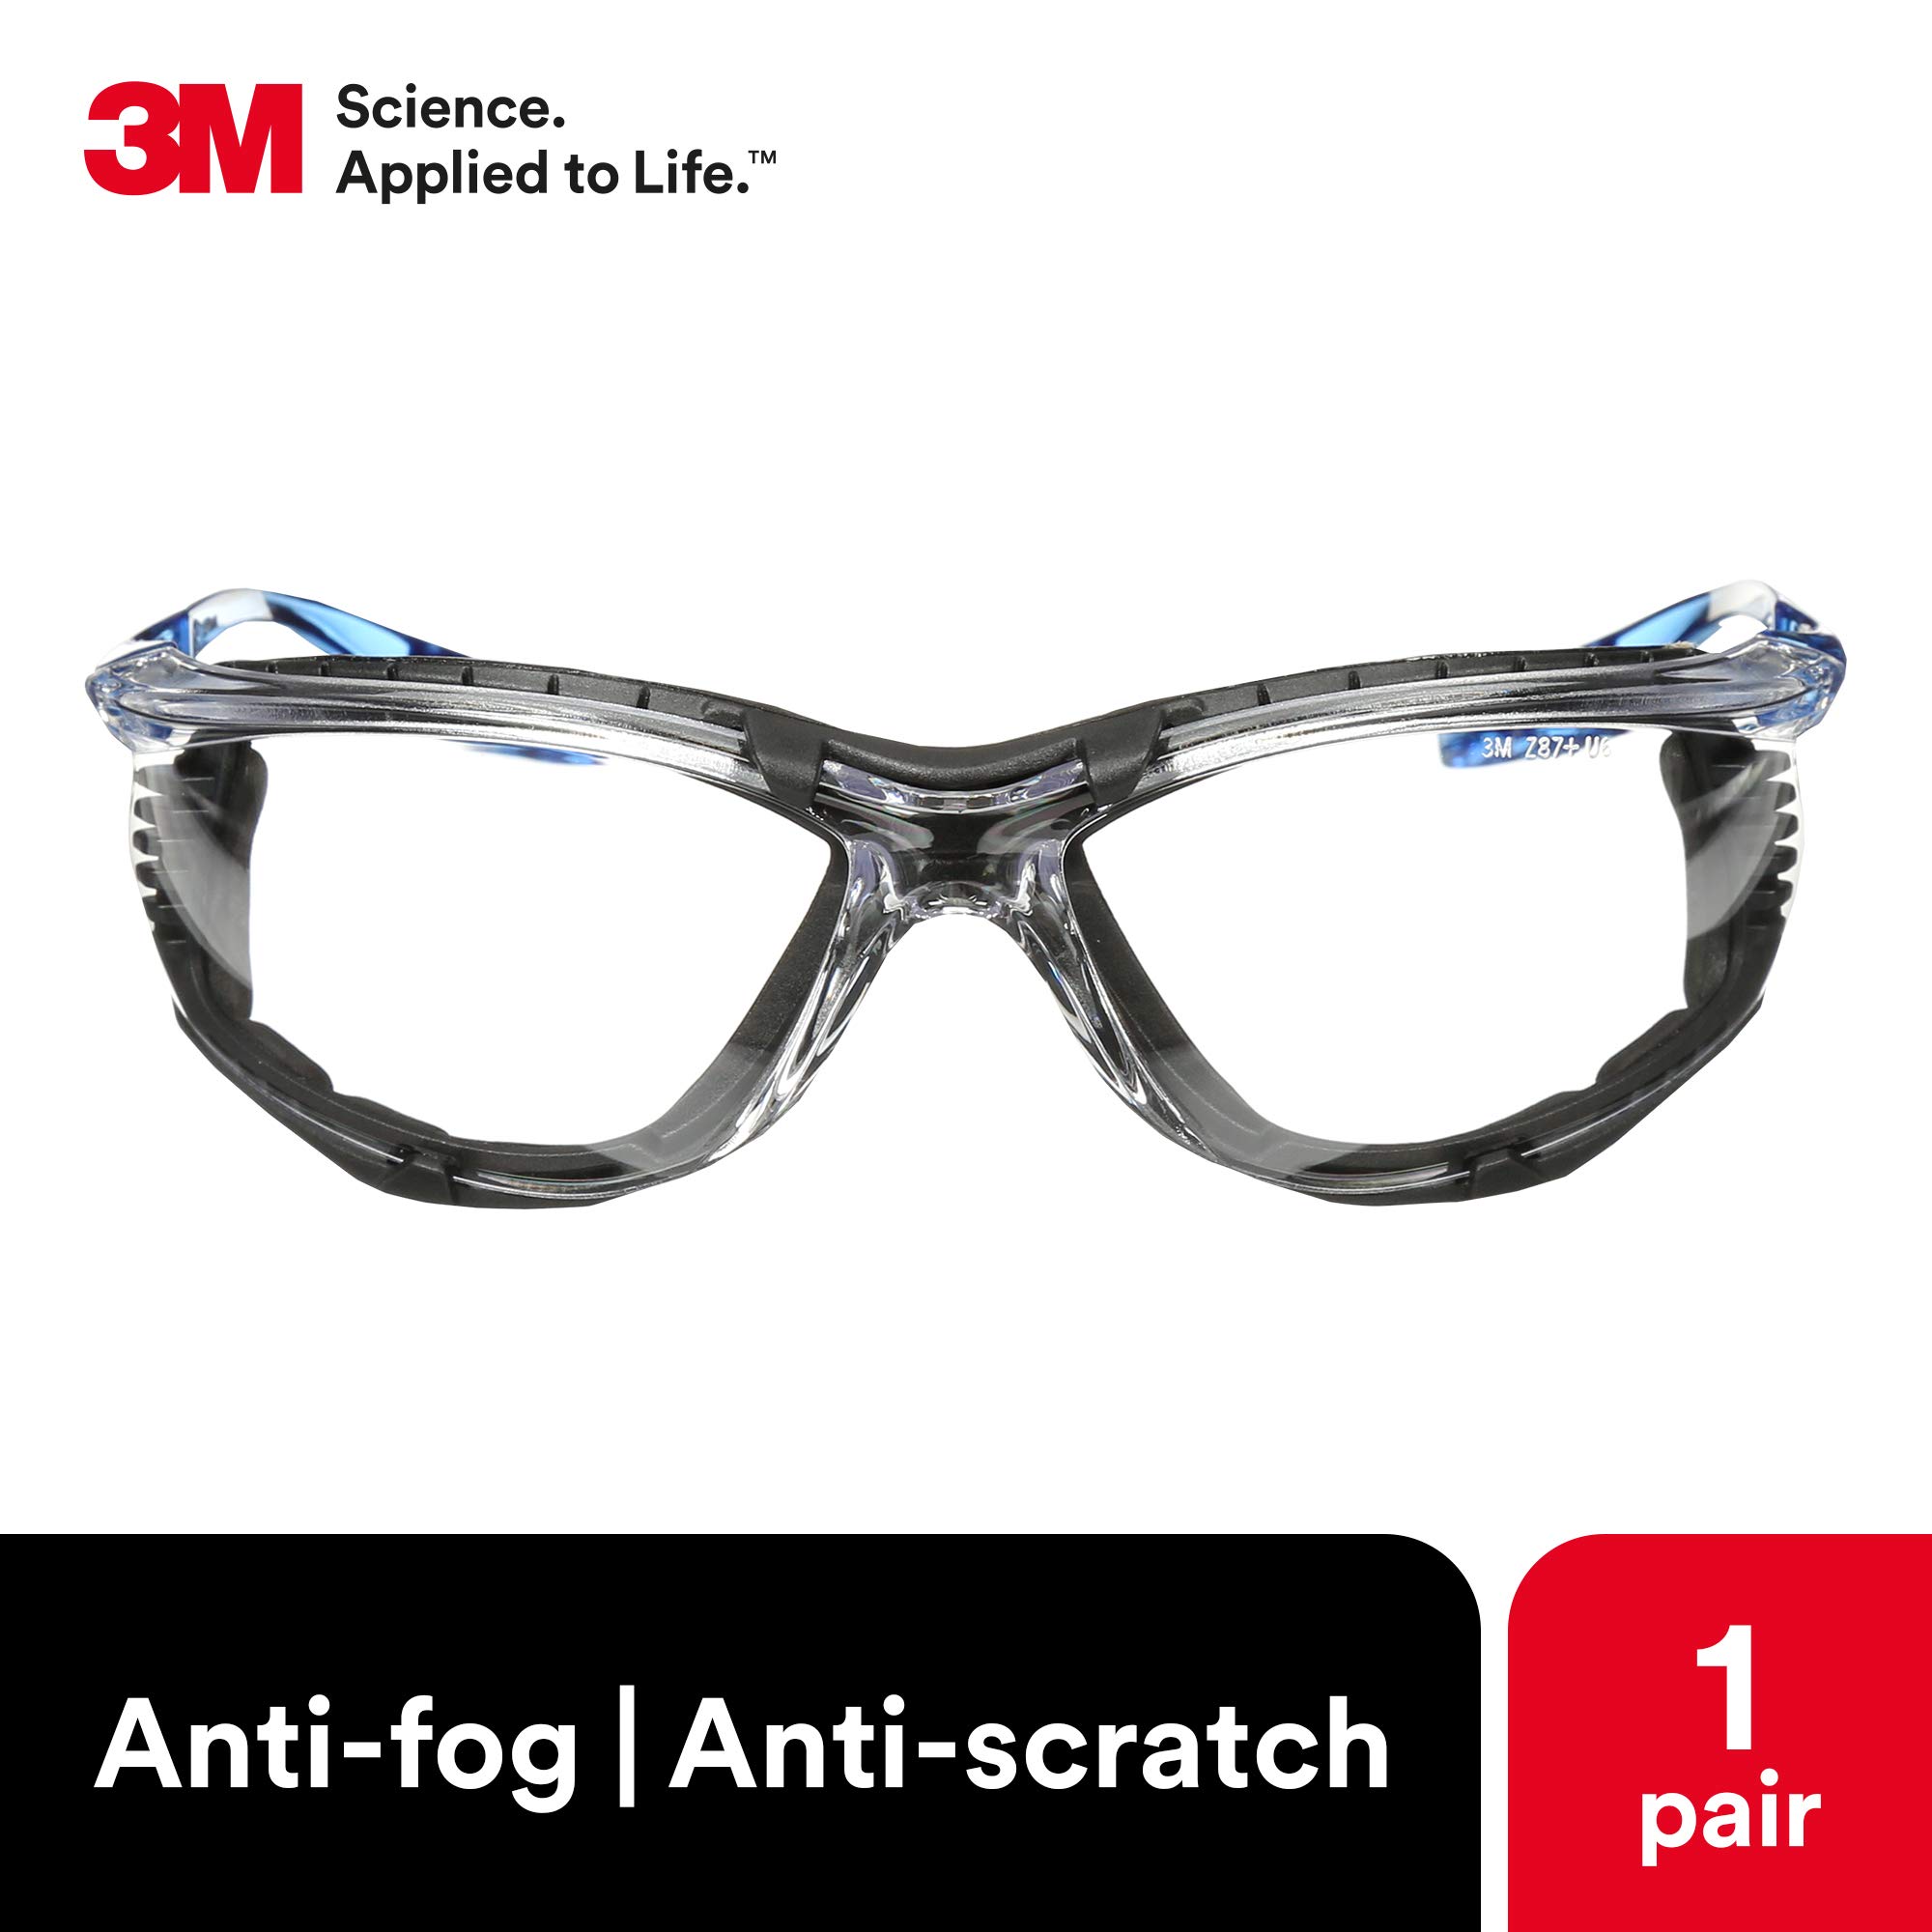 3M Safety Glasses, Virtua CCS, ANSI Z87, Anti-Fog, Clear Lens, Blue Frame, Corded Ear Plug Control System, Removable Foam Gasket